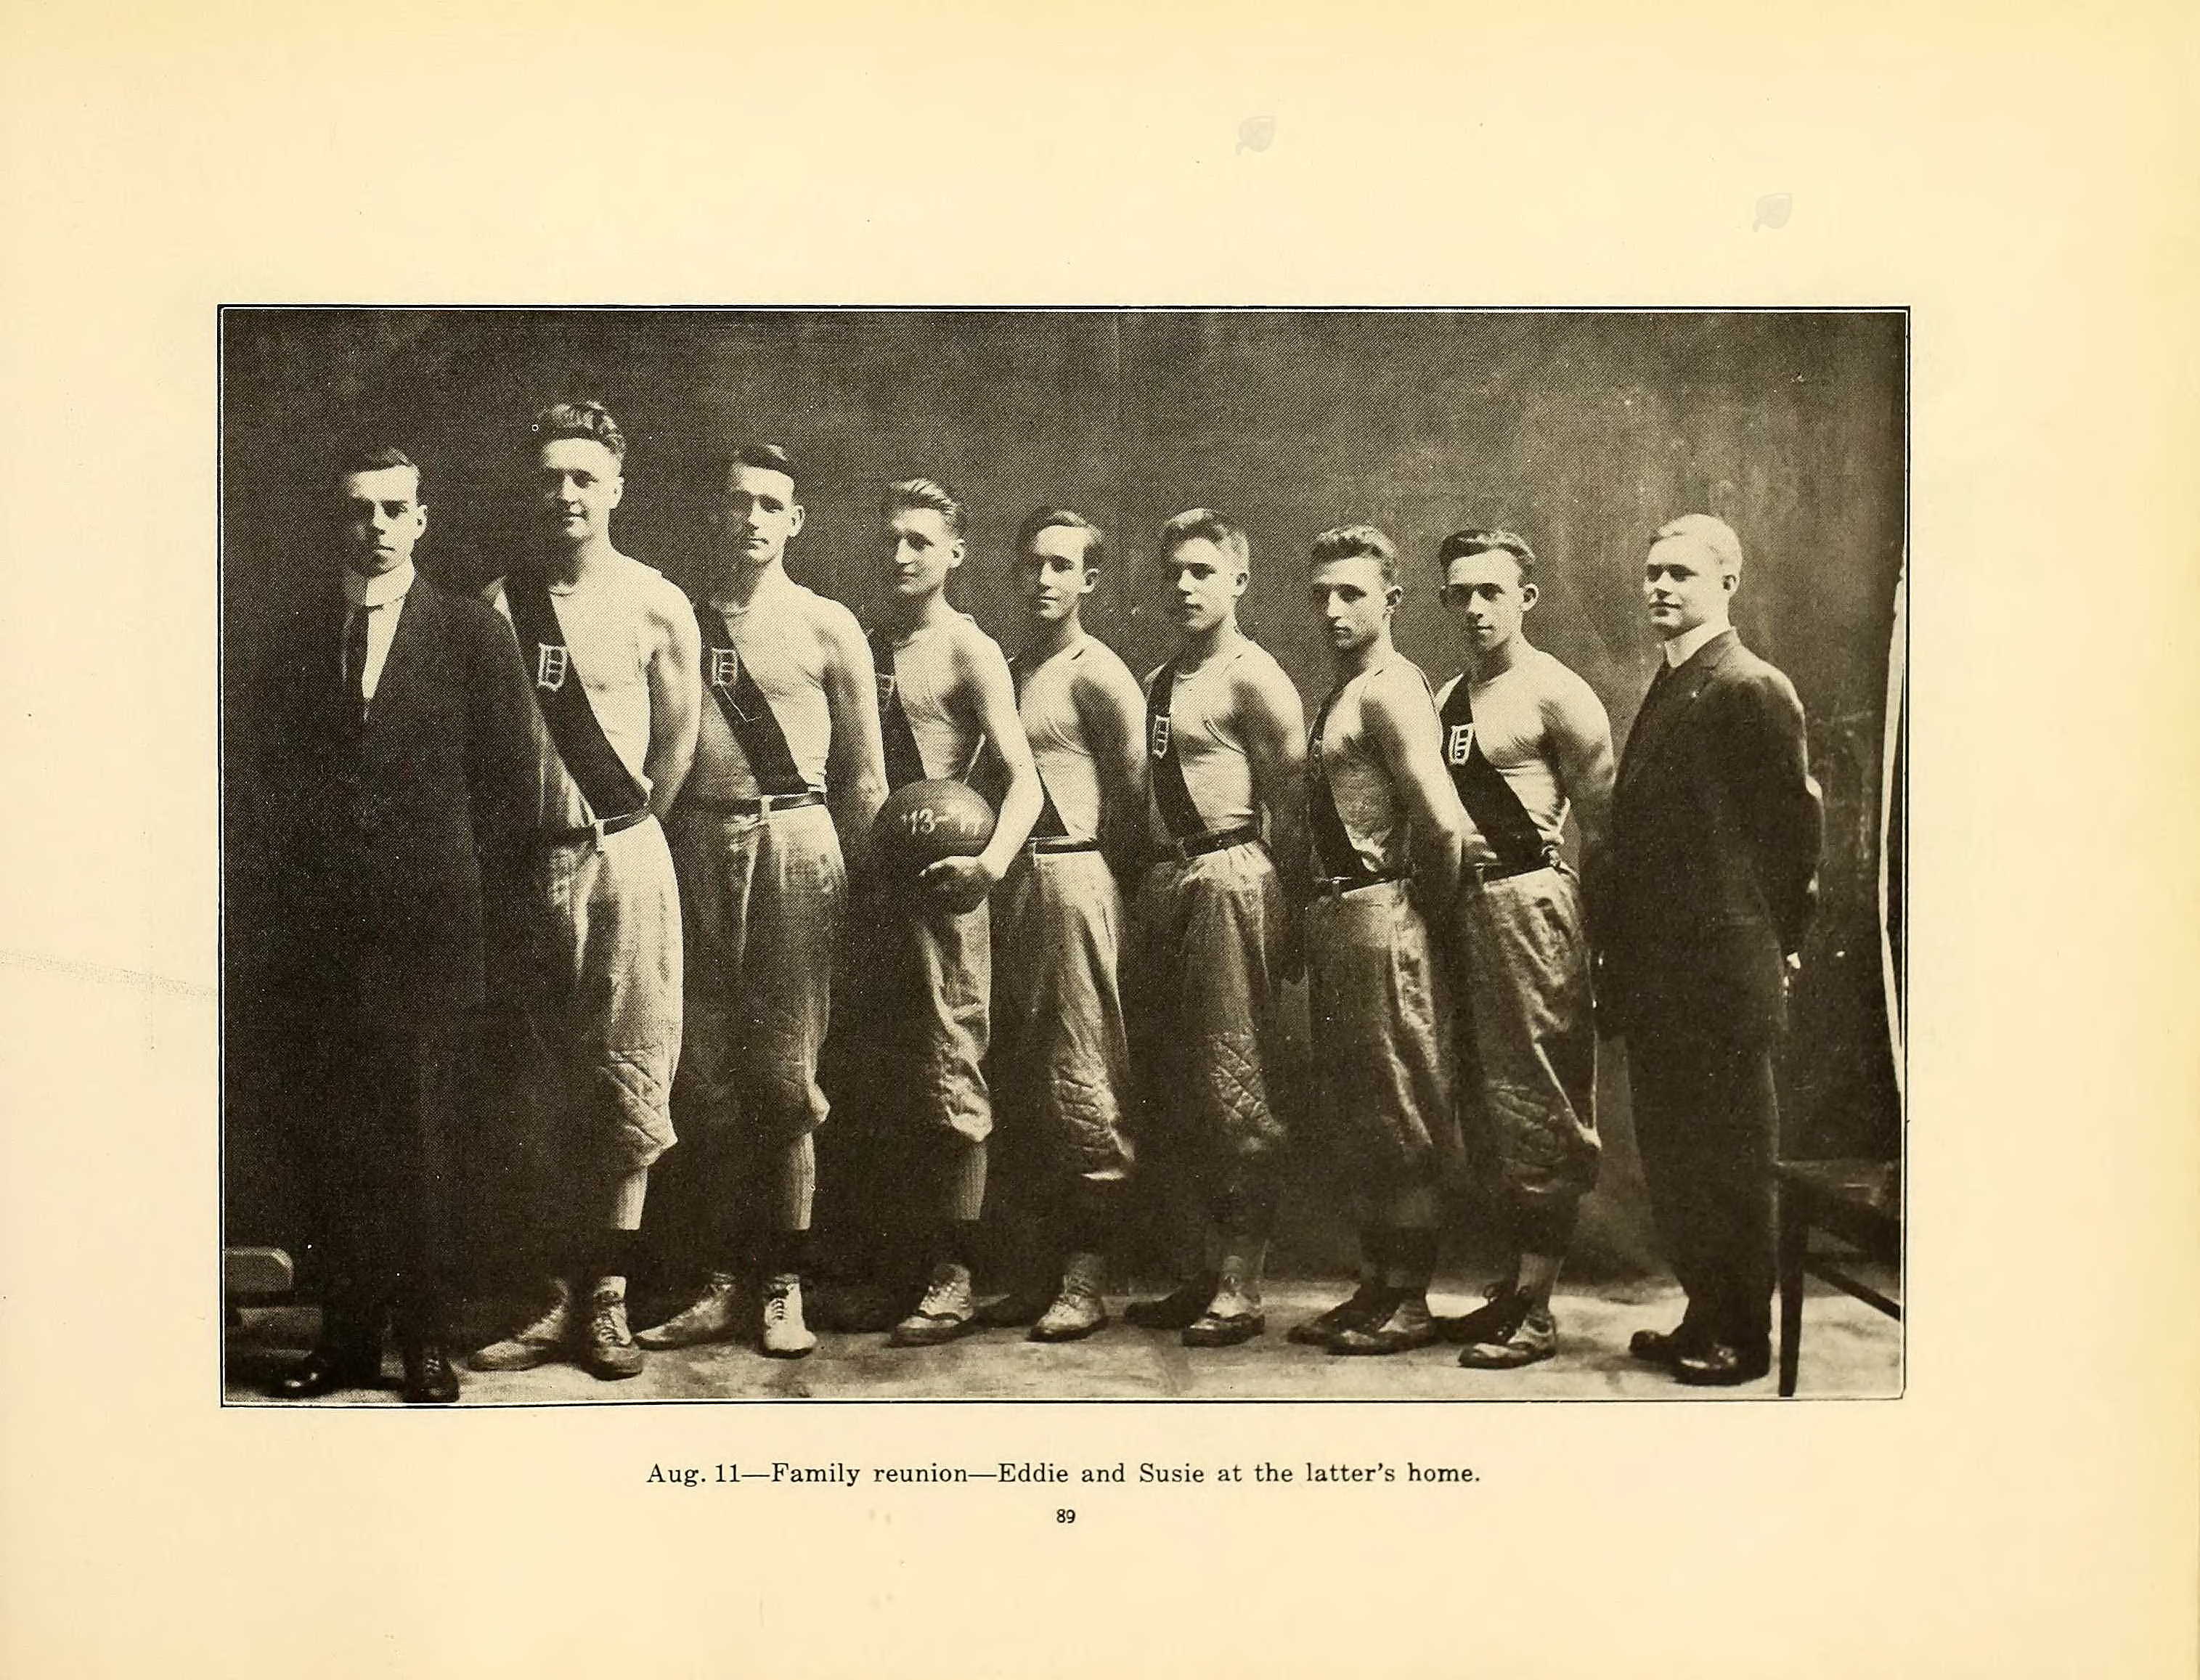 William Ackerson  Van Blarcom: Far Left - Defiance College, Defiance Ohio - Basketball team manager 1914